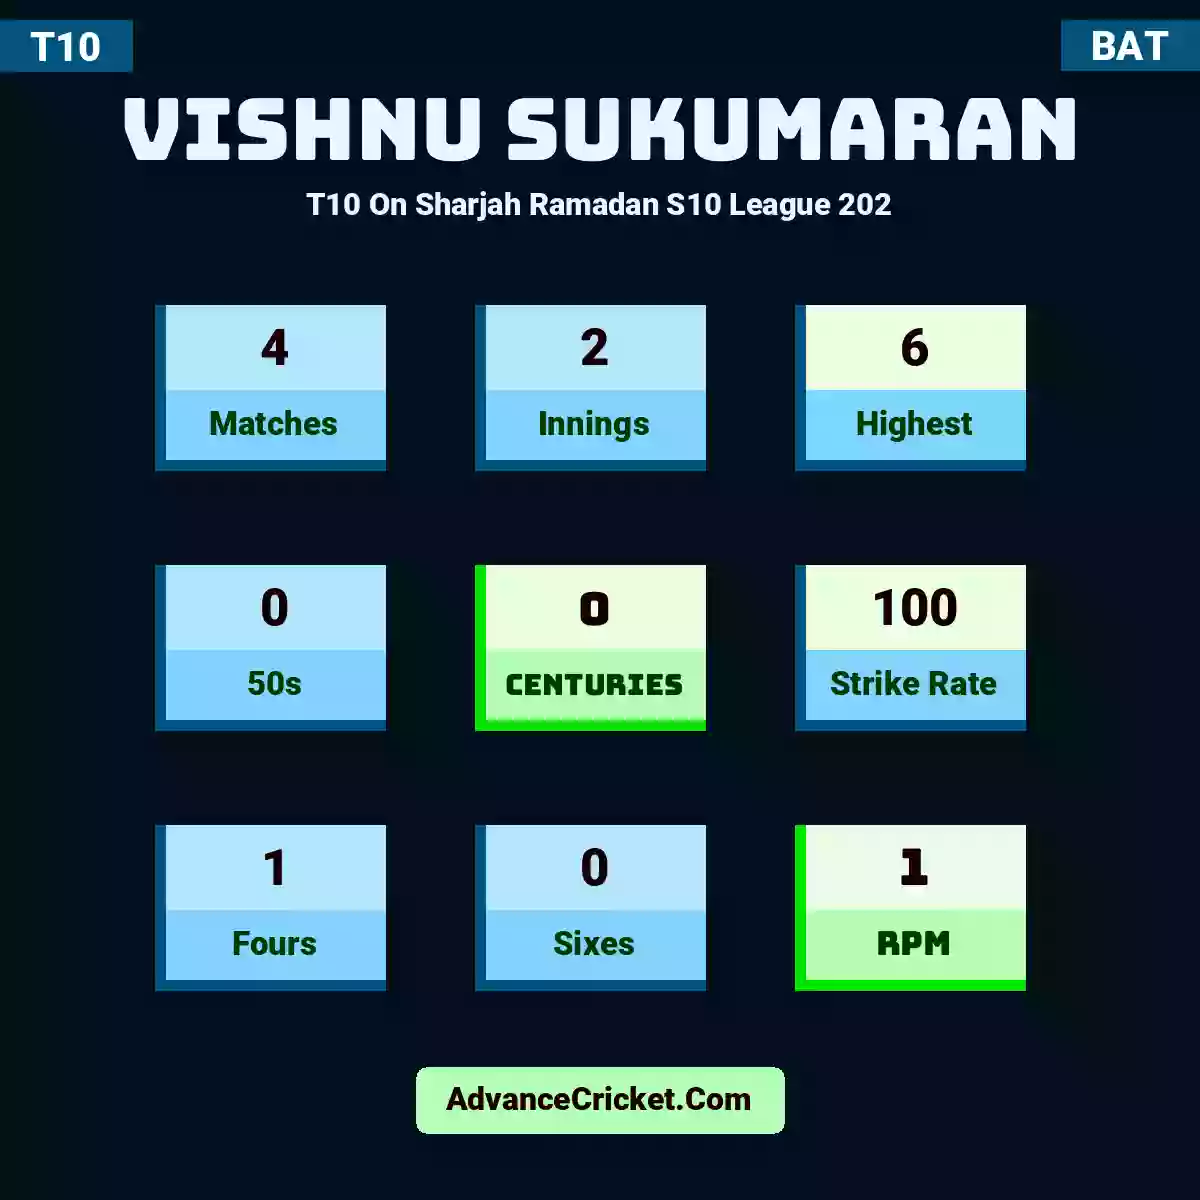 Vishnu Sukumaran T10  On Sharjah Ramadan S10 League 202, Vishnu Sukumaran played 4 matches, scored 6 runs as highest, 0 half-centuries, and 0 centuries, with a strike rate of 100. V.Sukumaran hit 1 fours and 0 sixes, with an RPM of 1.